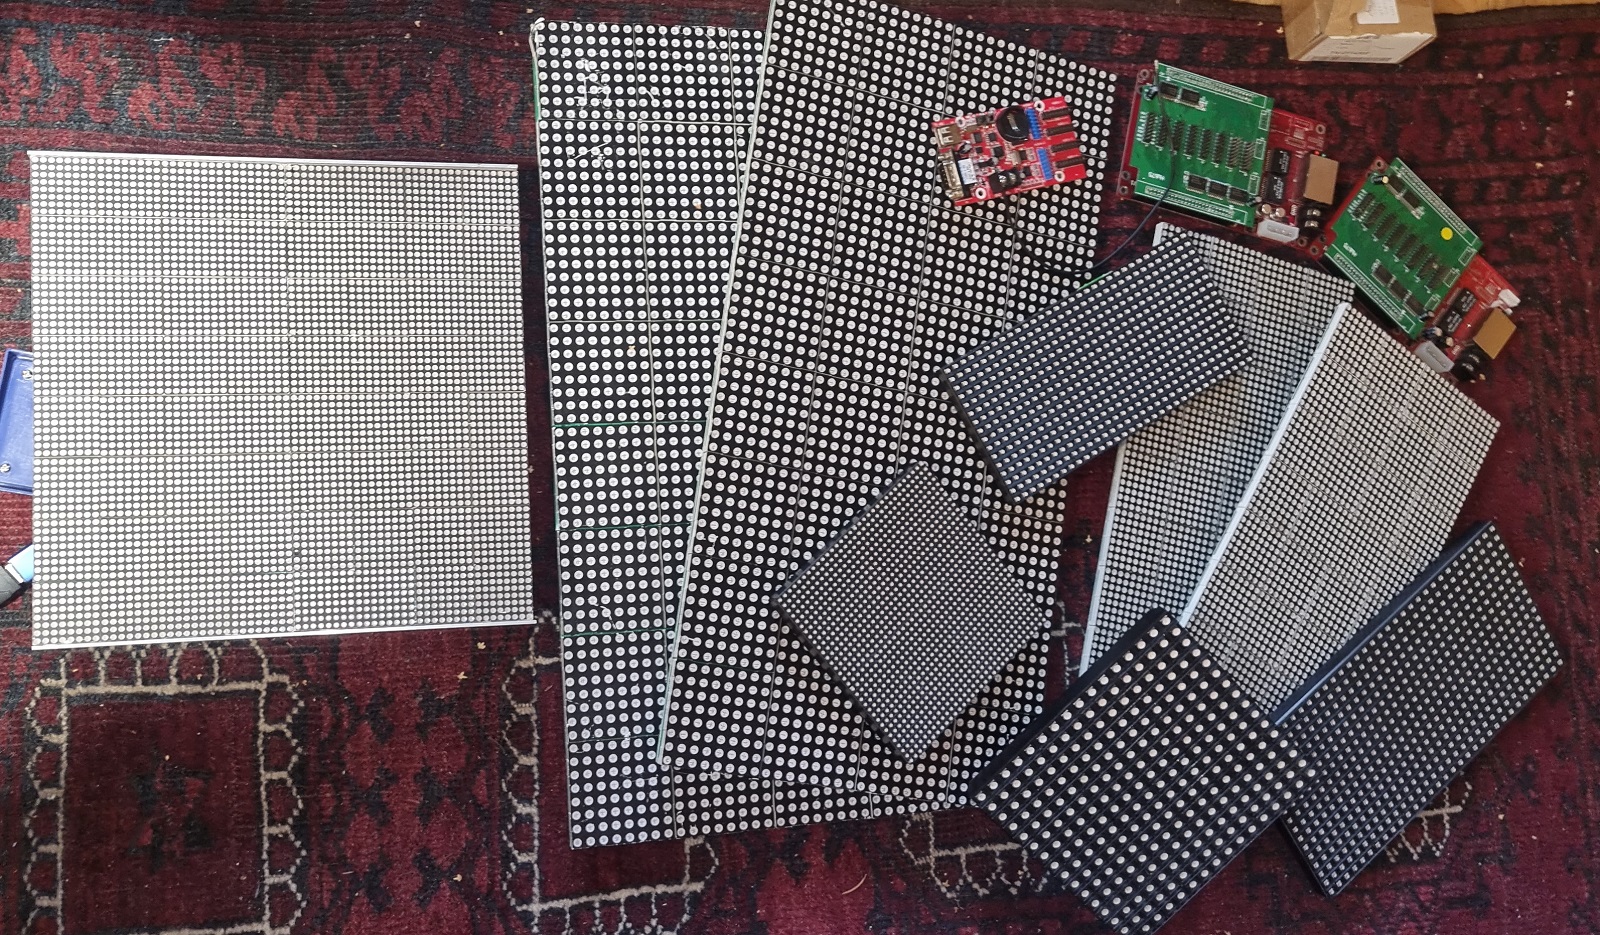 LED matrix boards